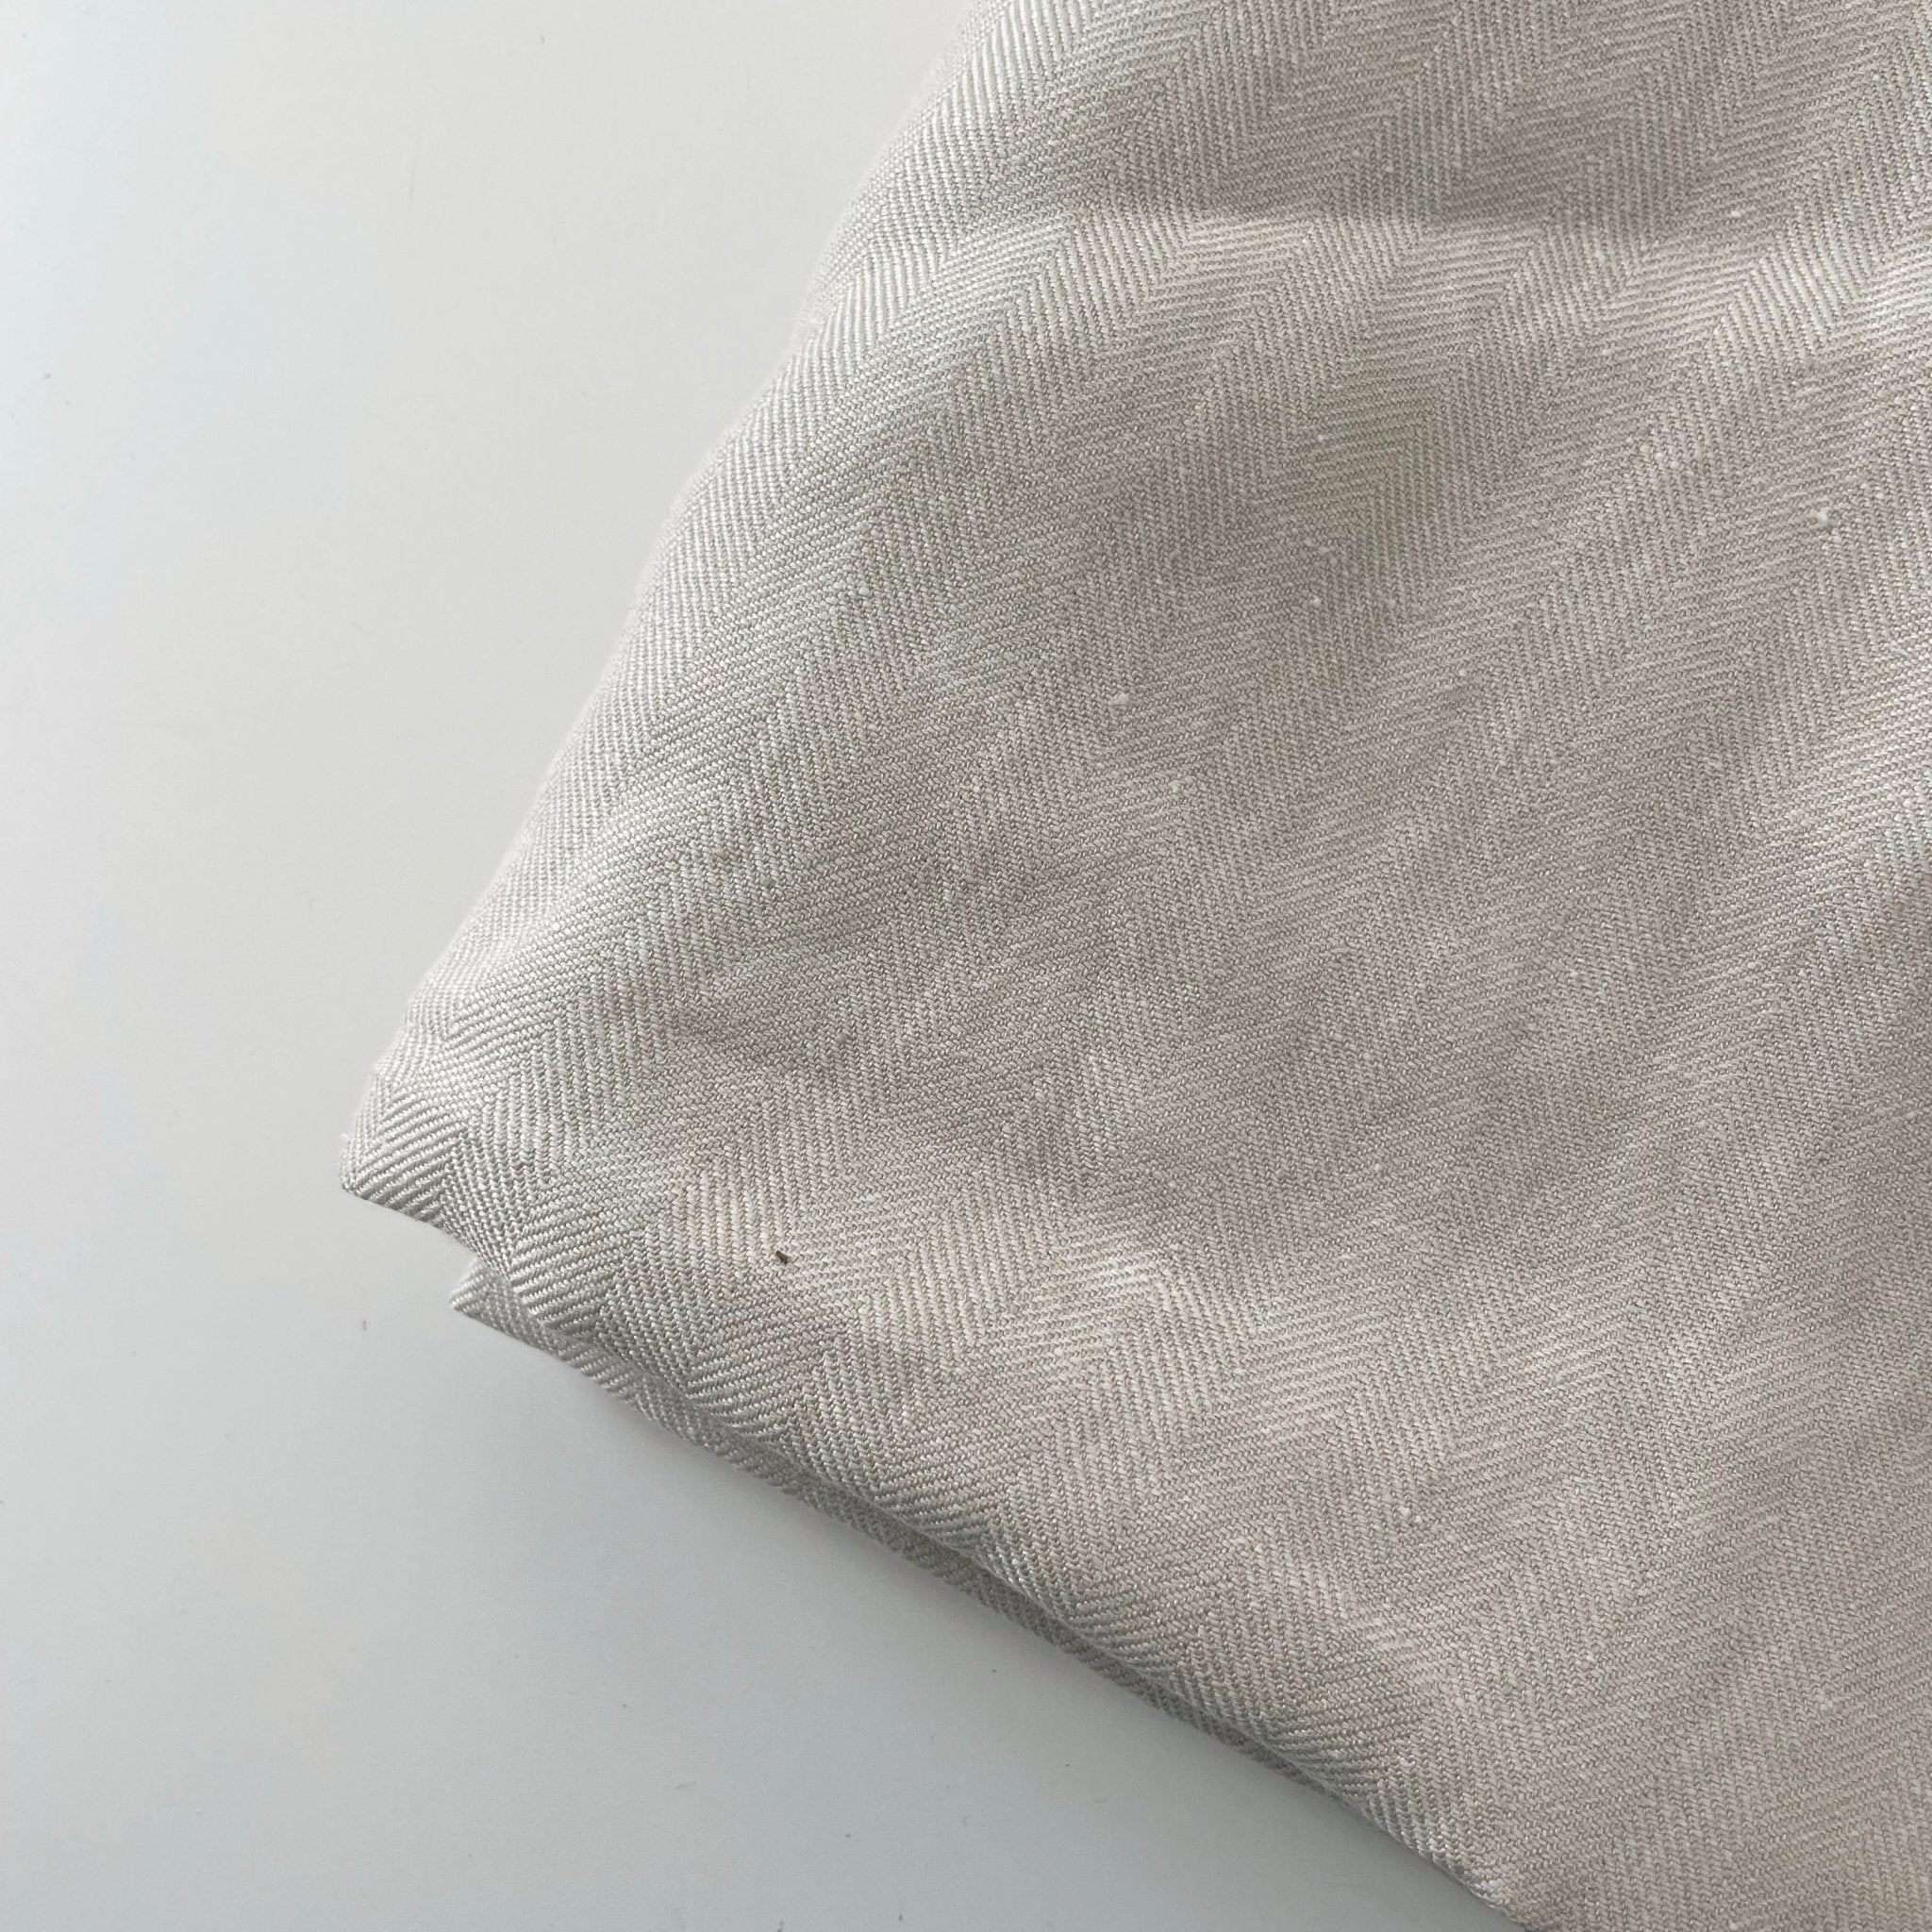 Linen Fabric HBT Herringbone Twill 6862 - The Linen Lab - Beige